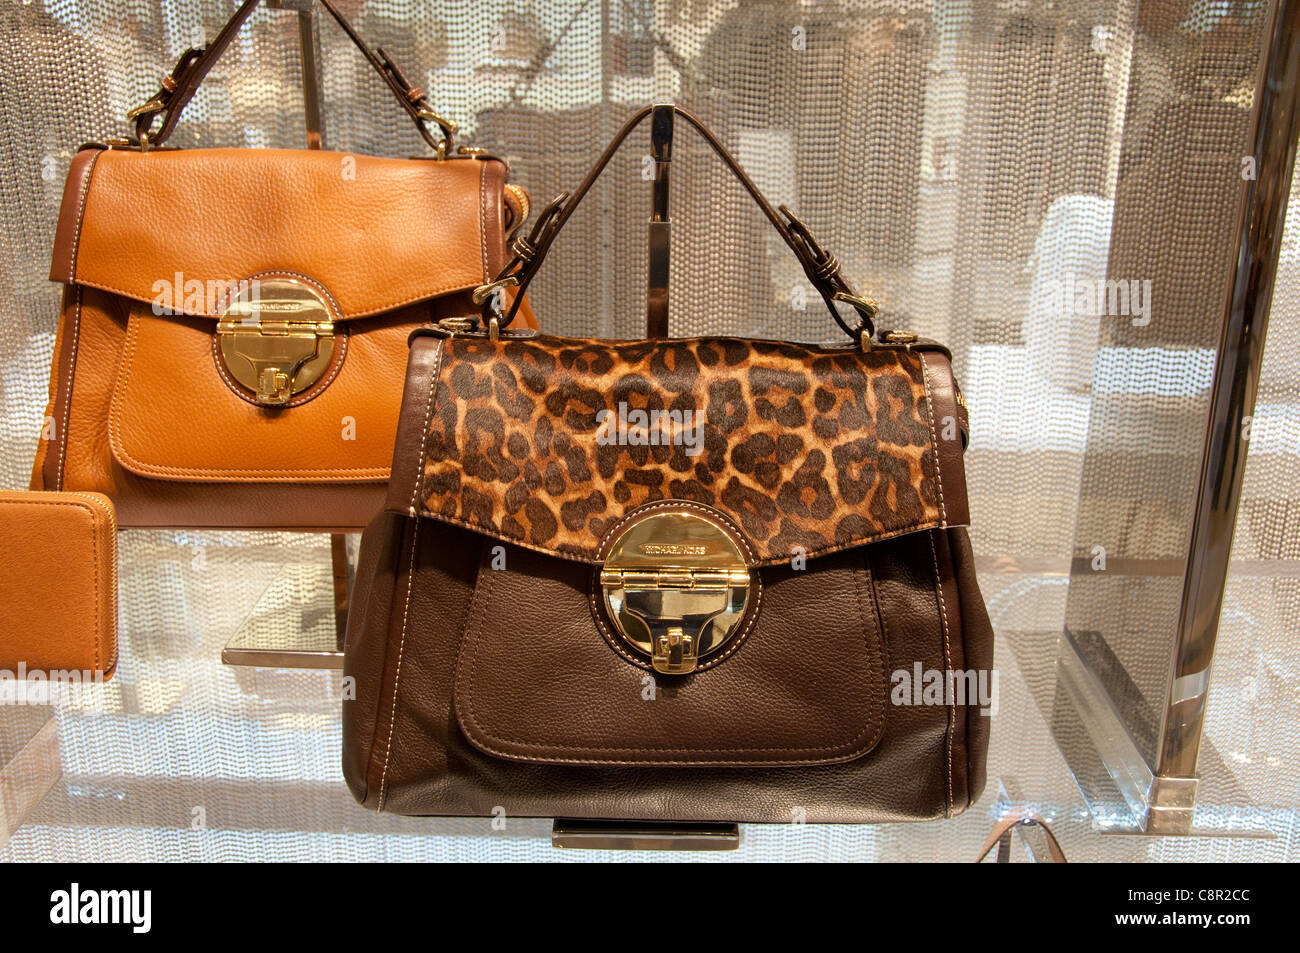 Bag Bags Michael Kors New York shop display window United states of America  Stock Photo - Alamy